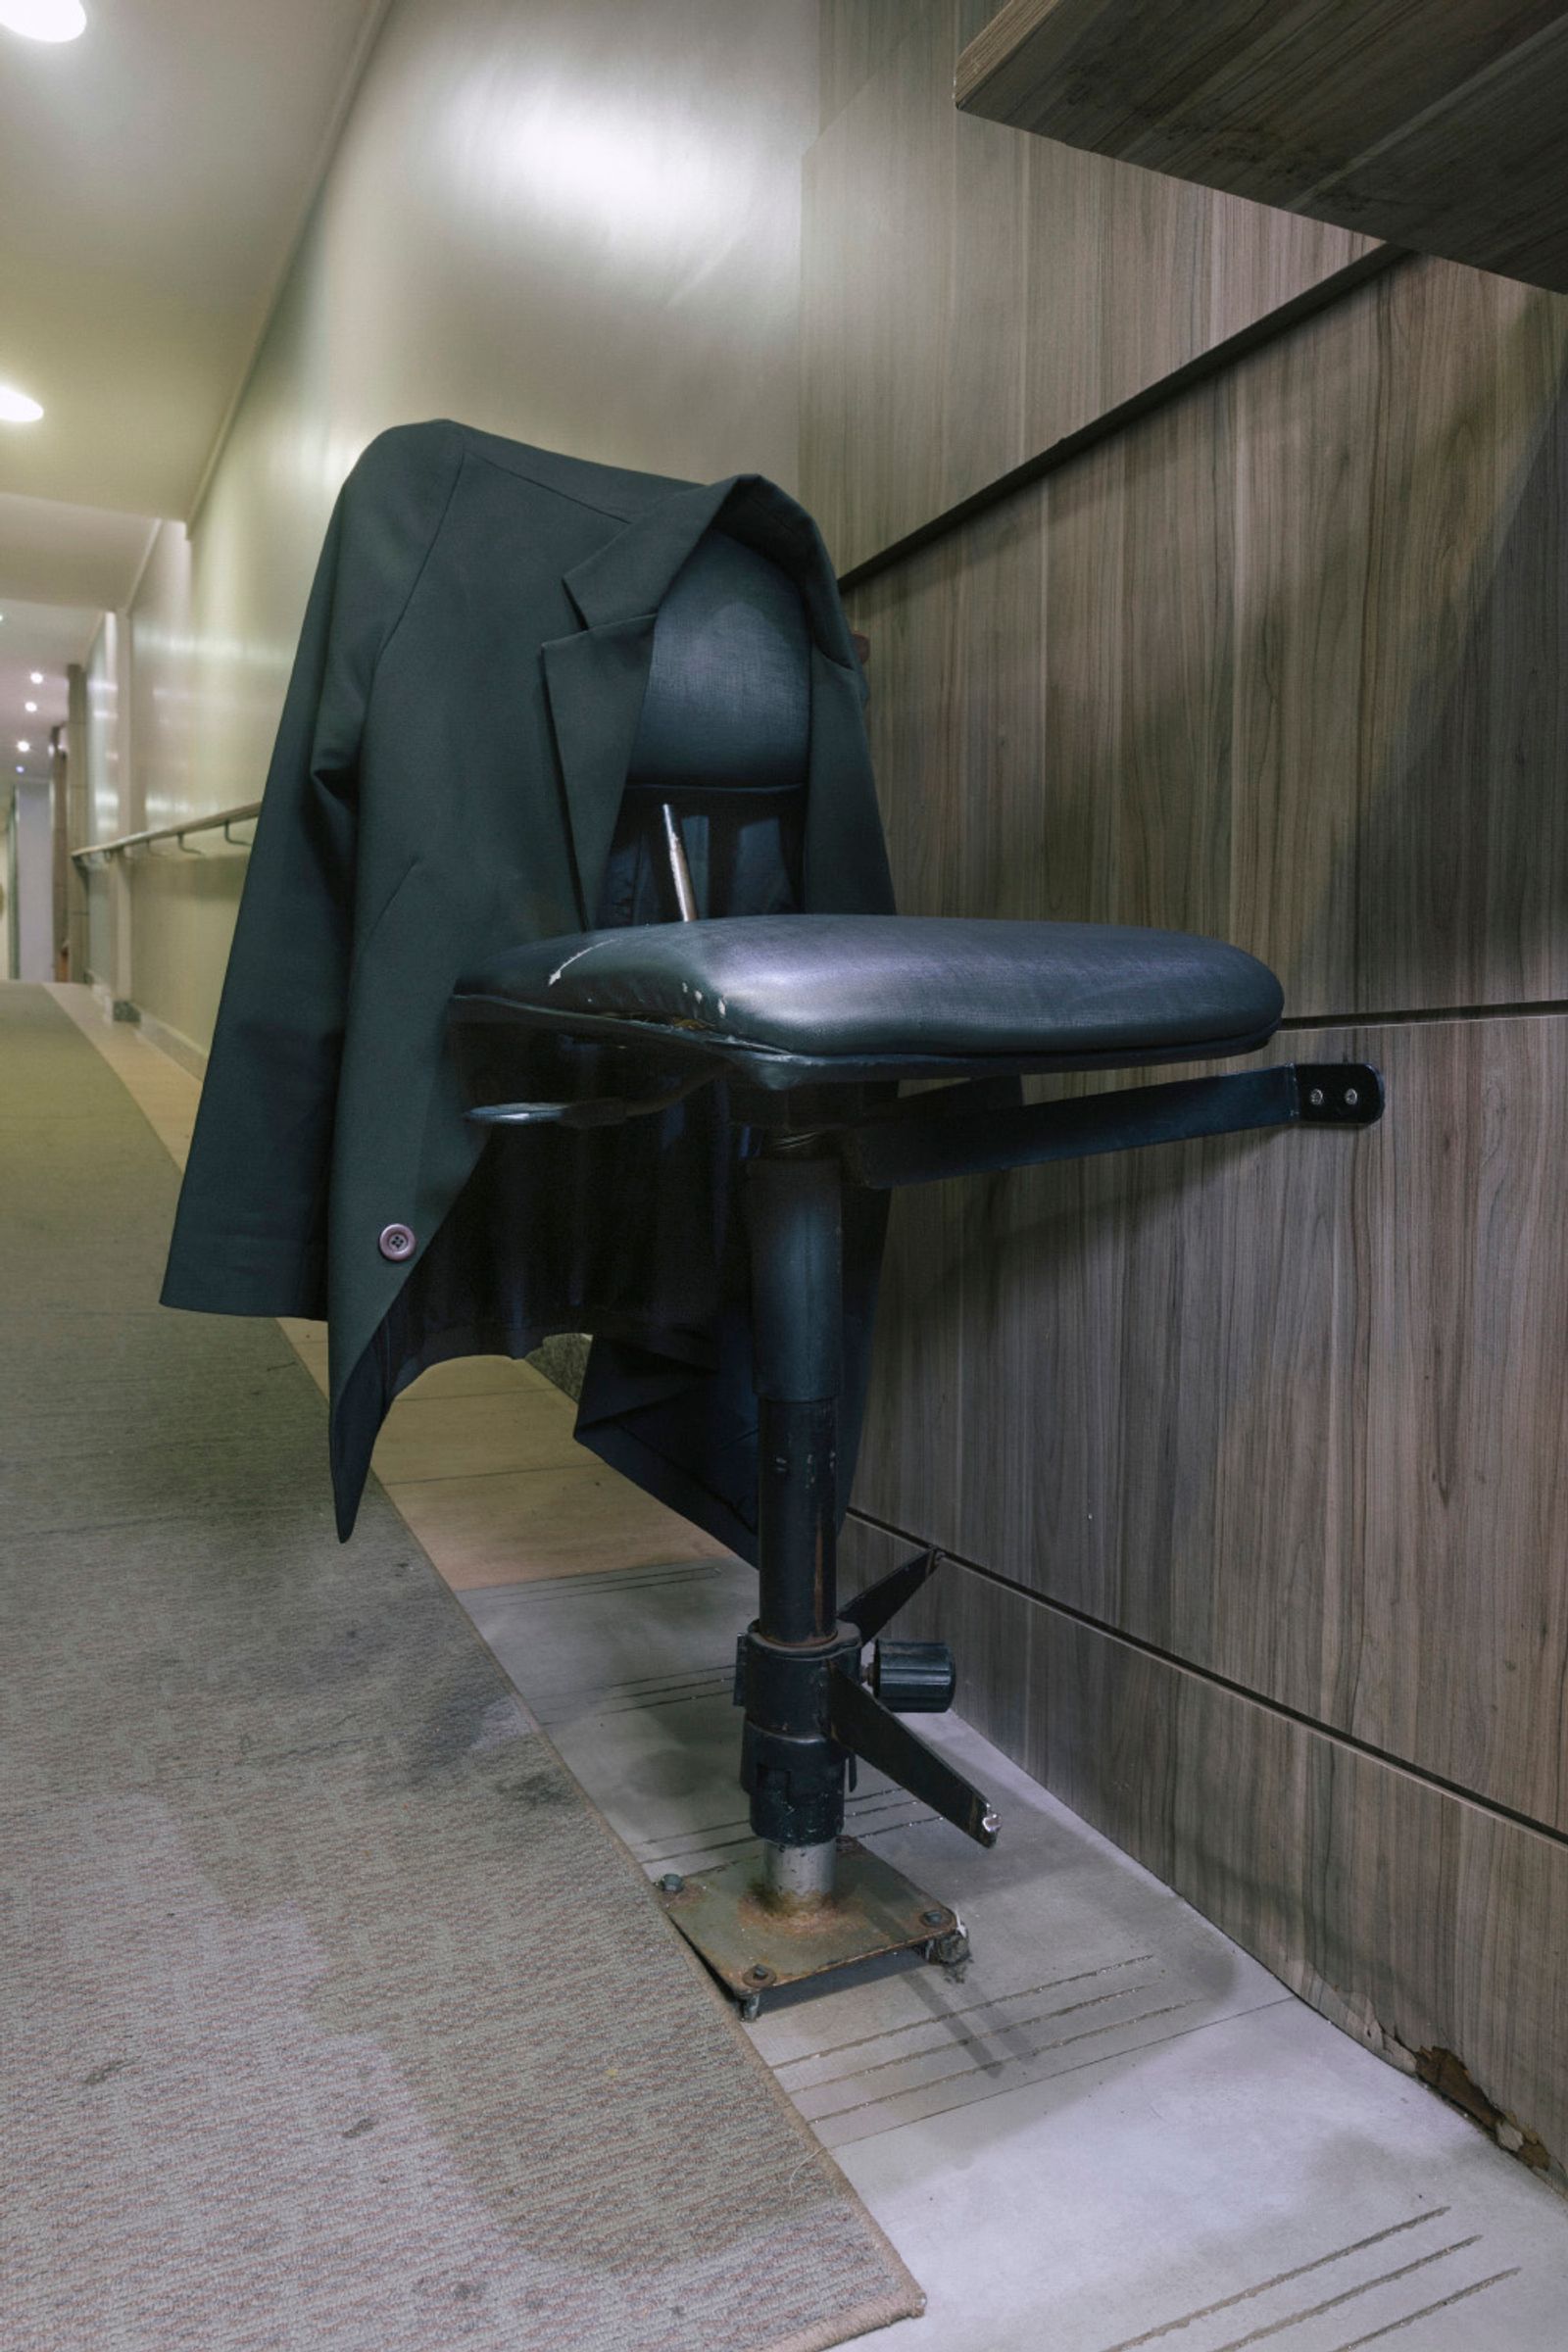 © Gabriel Carpes - An empty chair where a doorman sits at an apartment building.